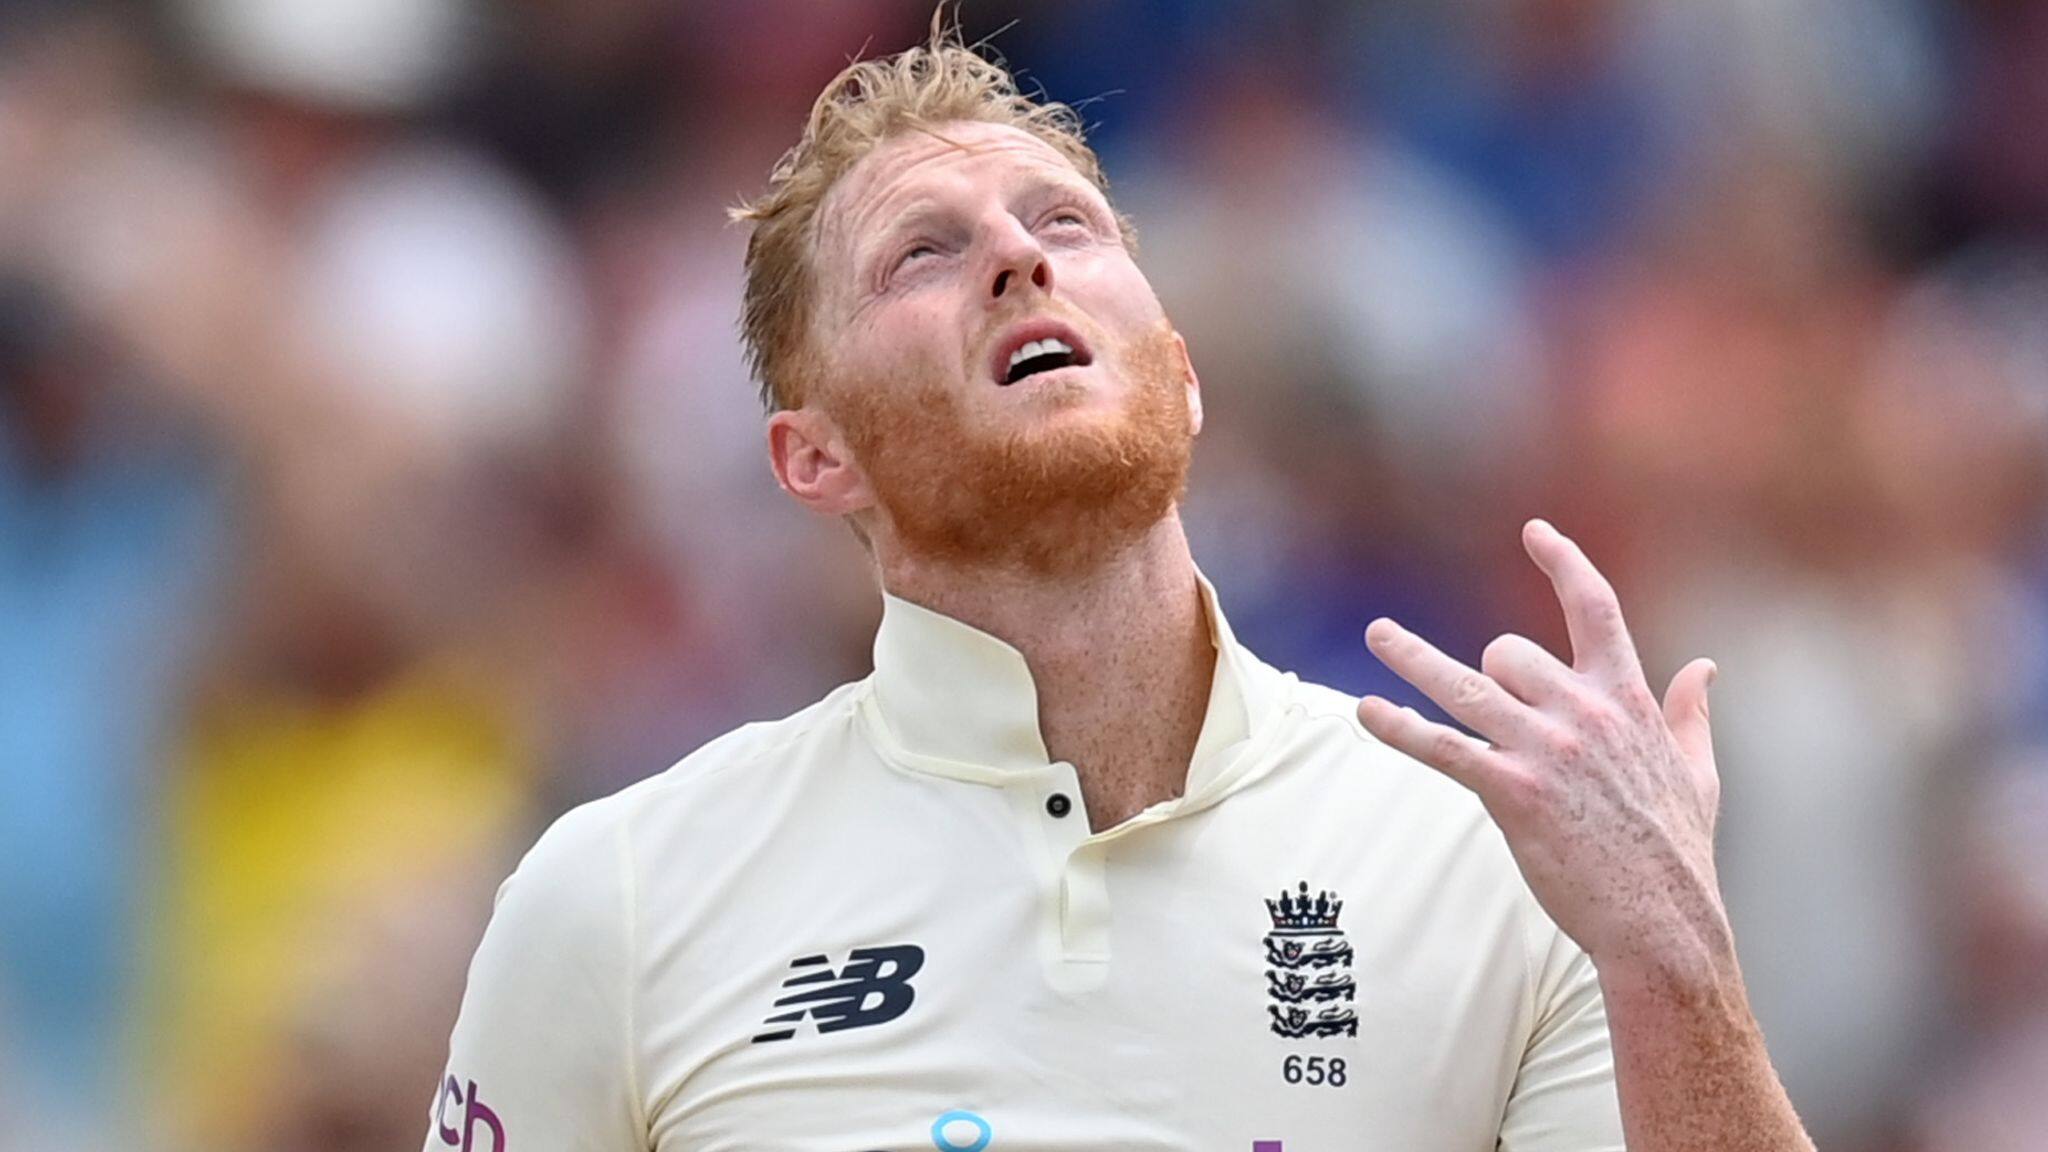 Ben Stokes wants 3rd Test match to resume to honour Queen Elizabeth II